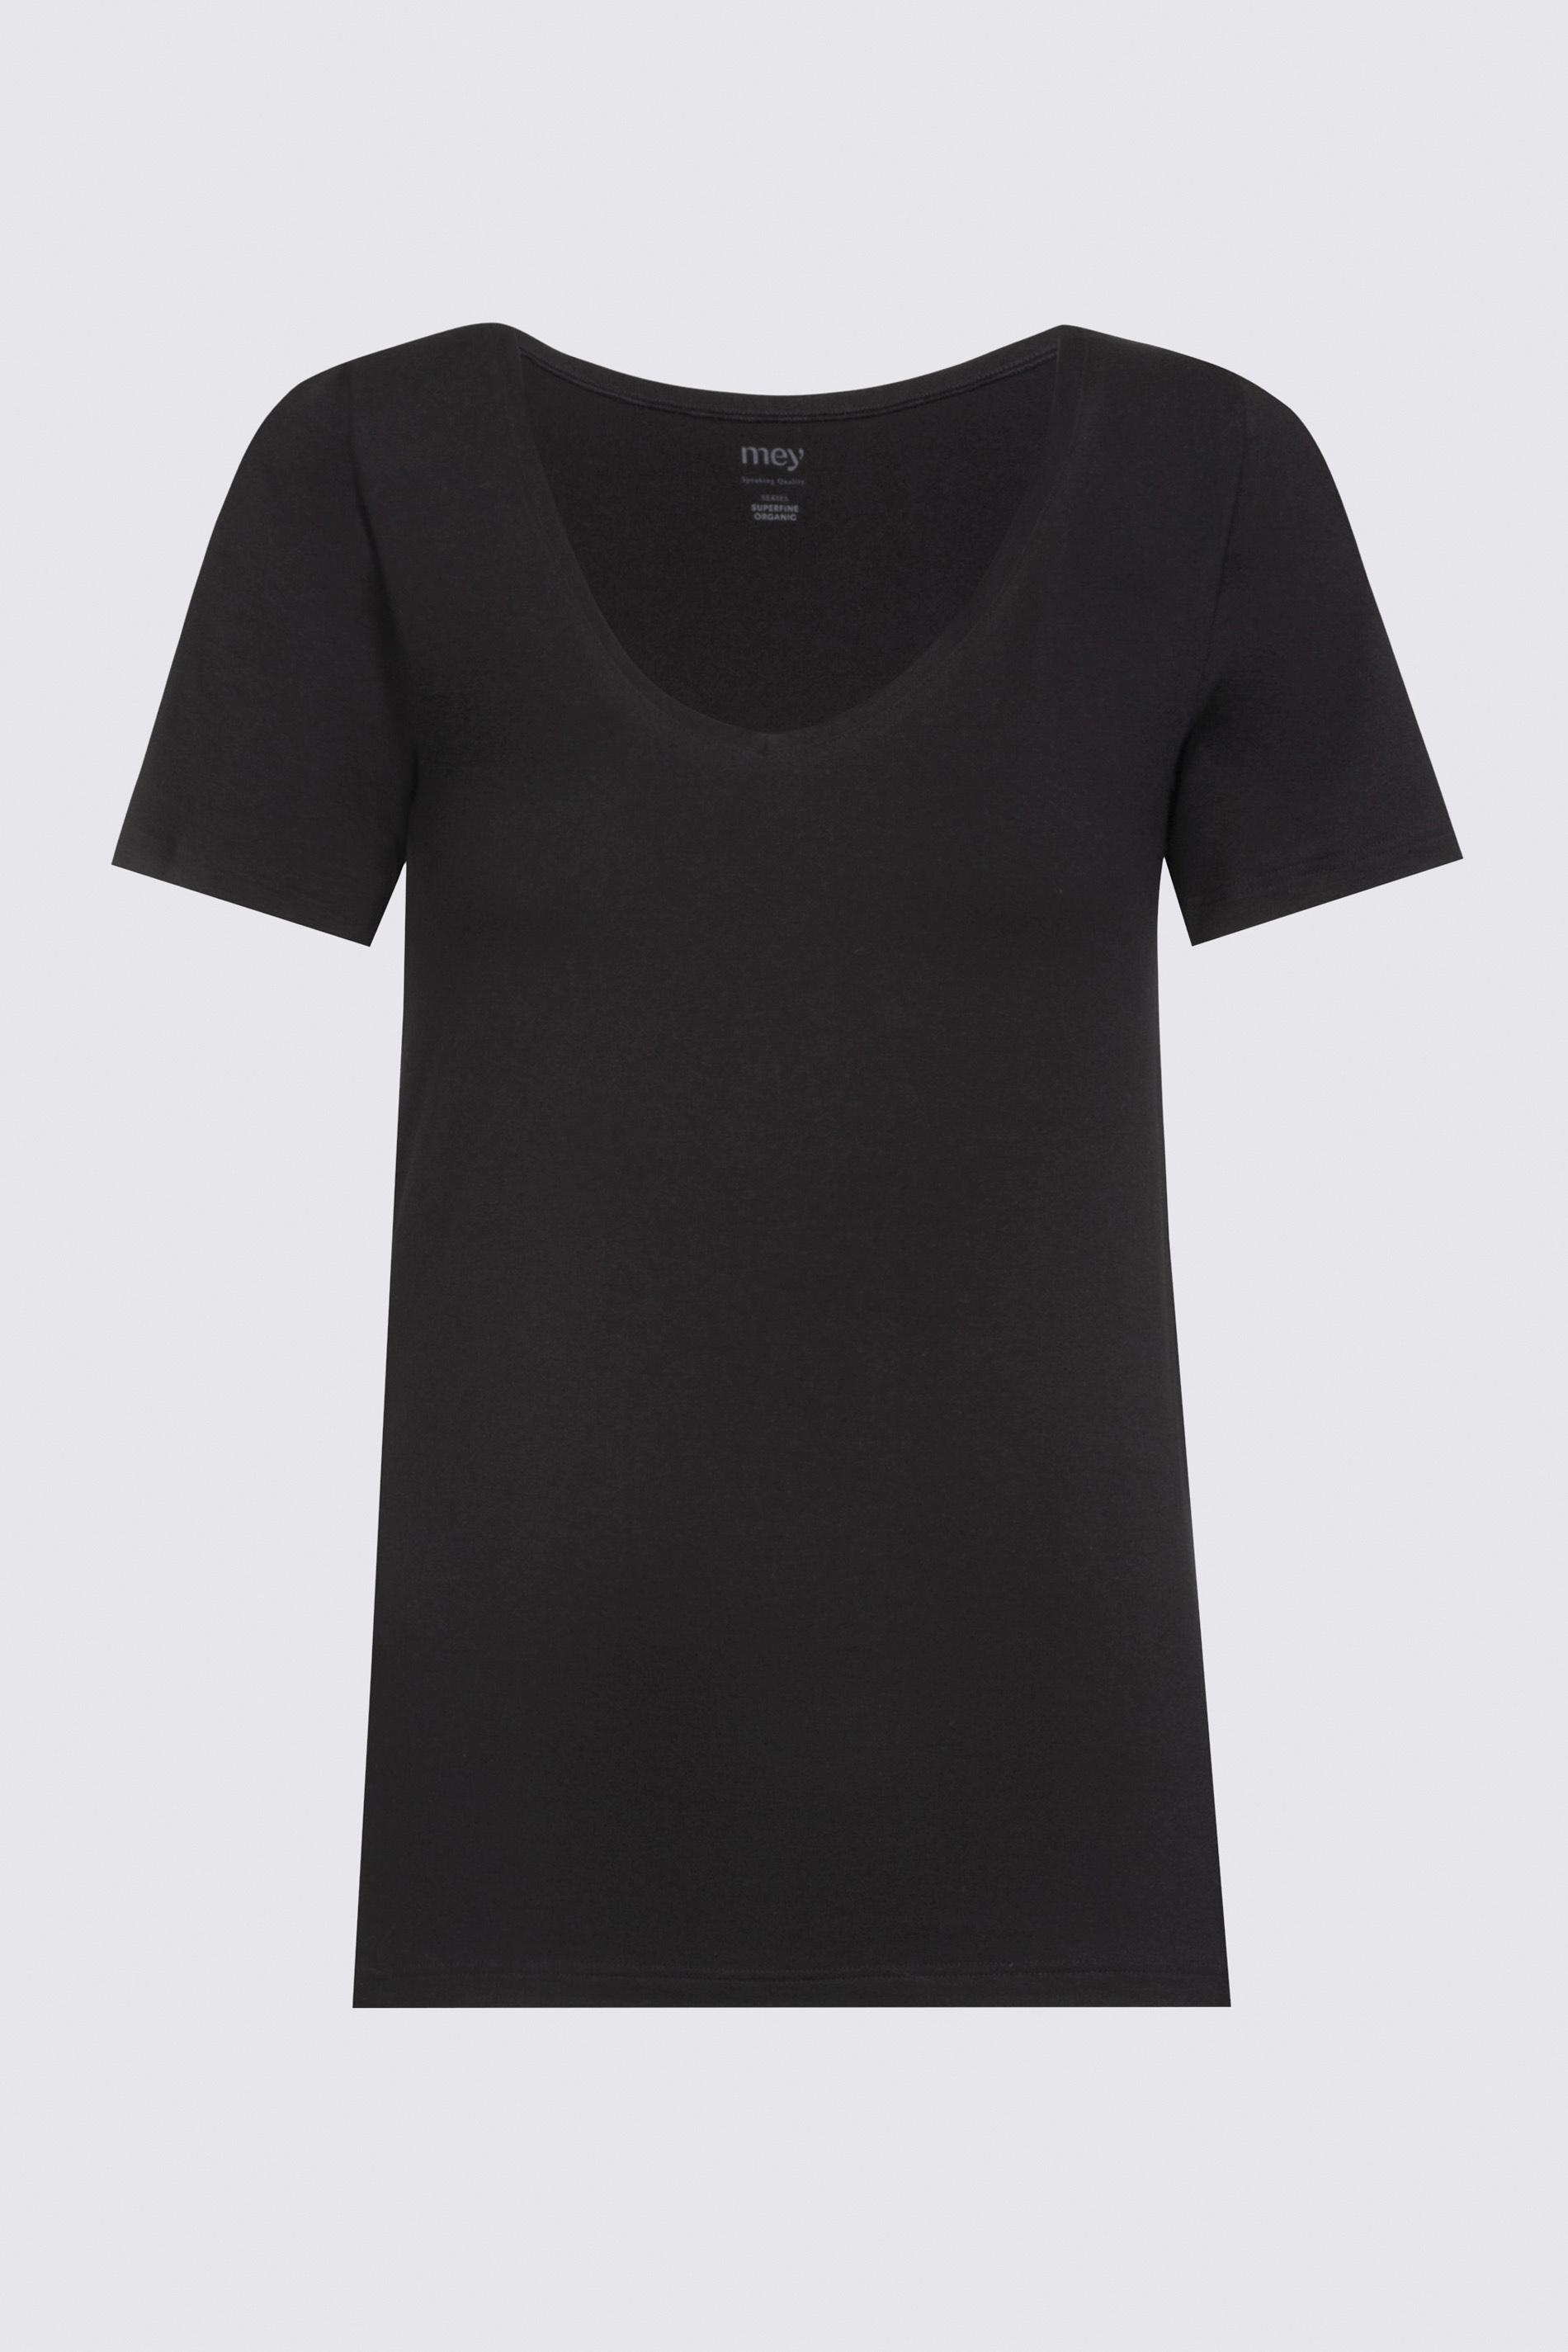 Shirt Black Serie Superfine Organic Cut Out | mey®